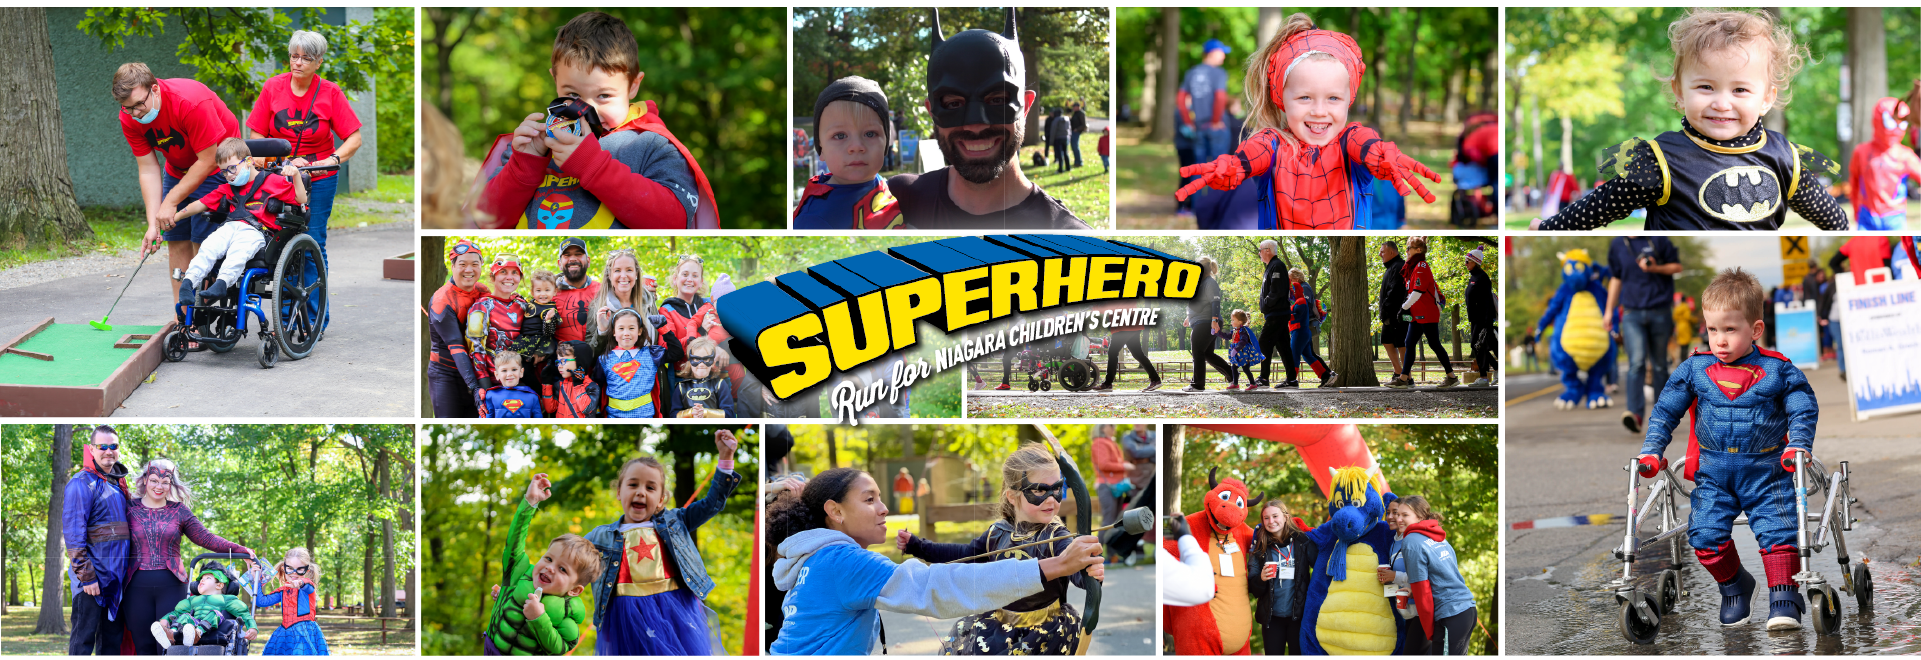 Participants at the Superhero Run